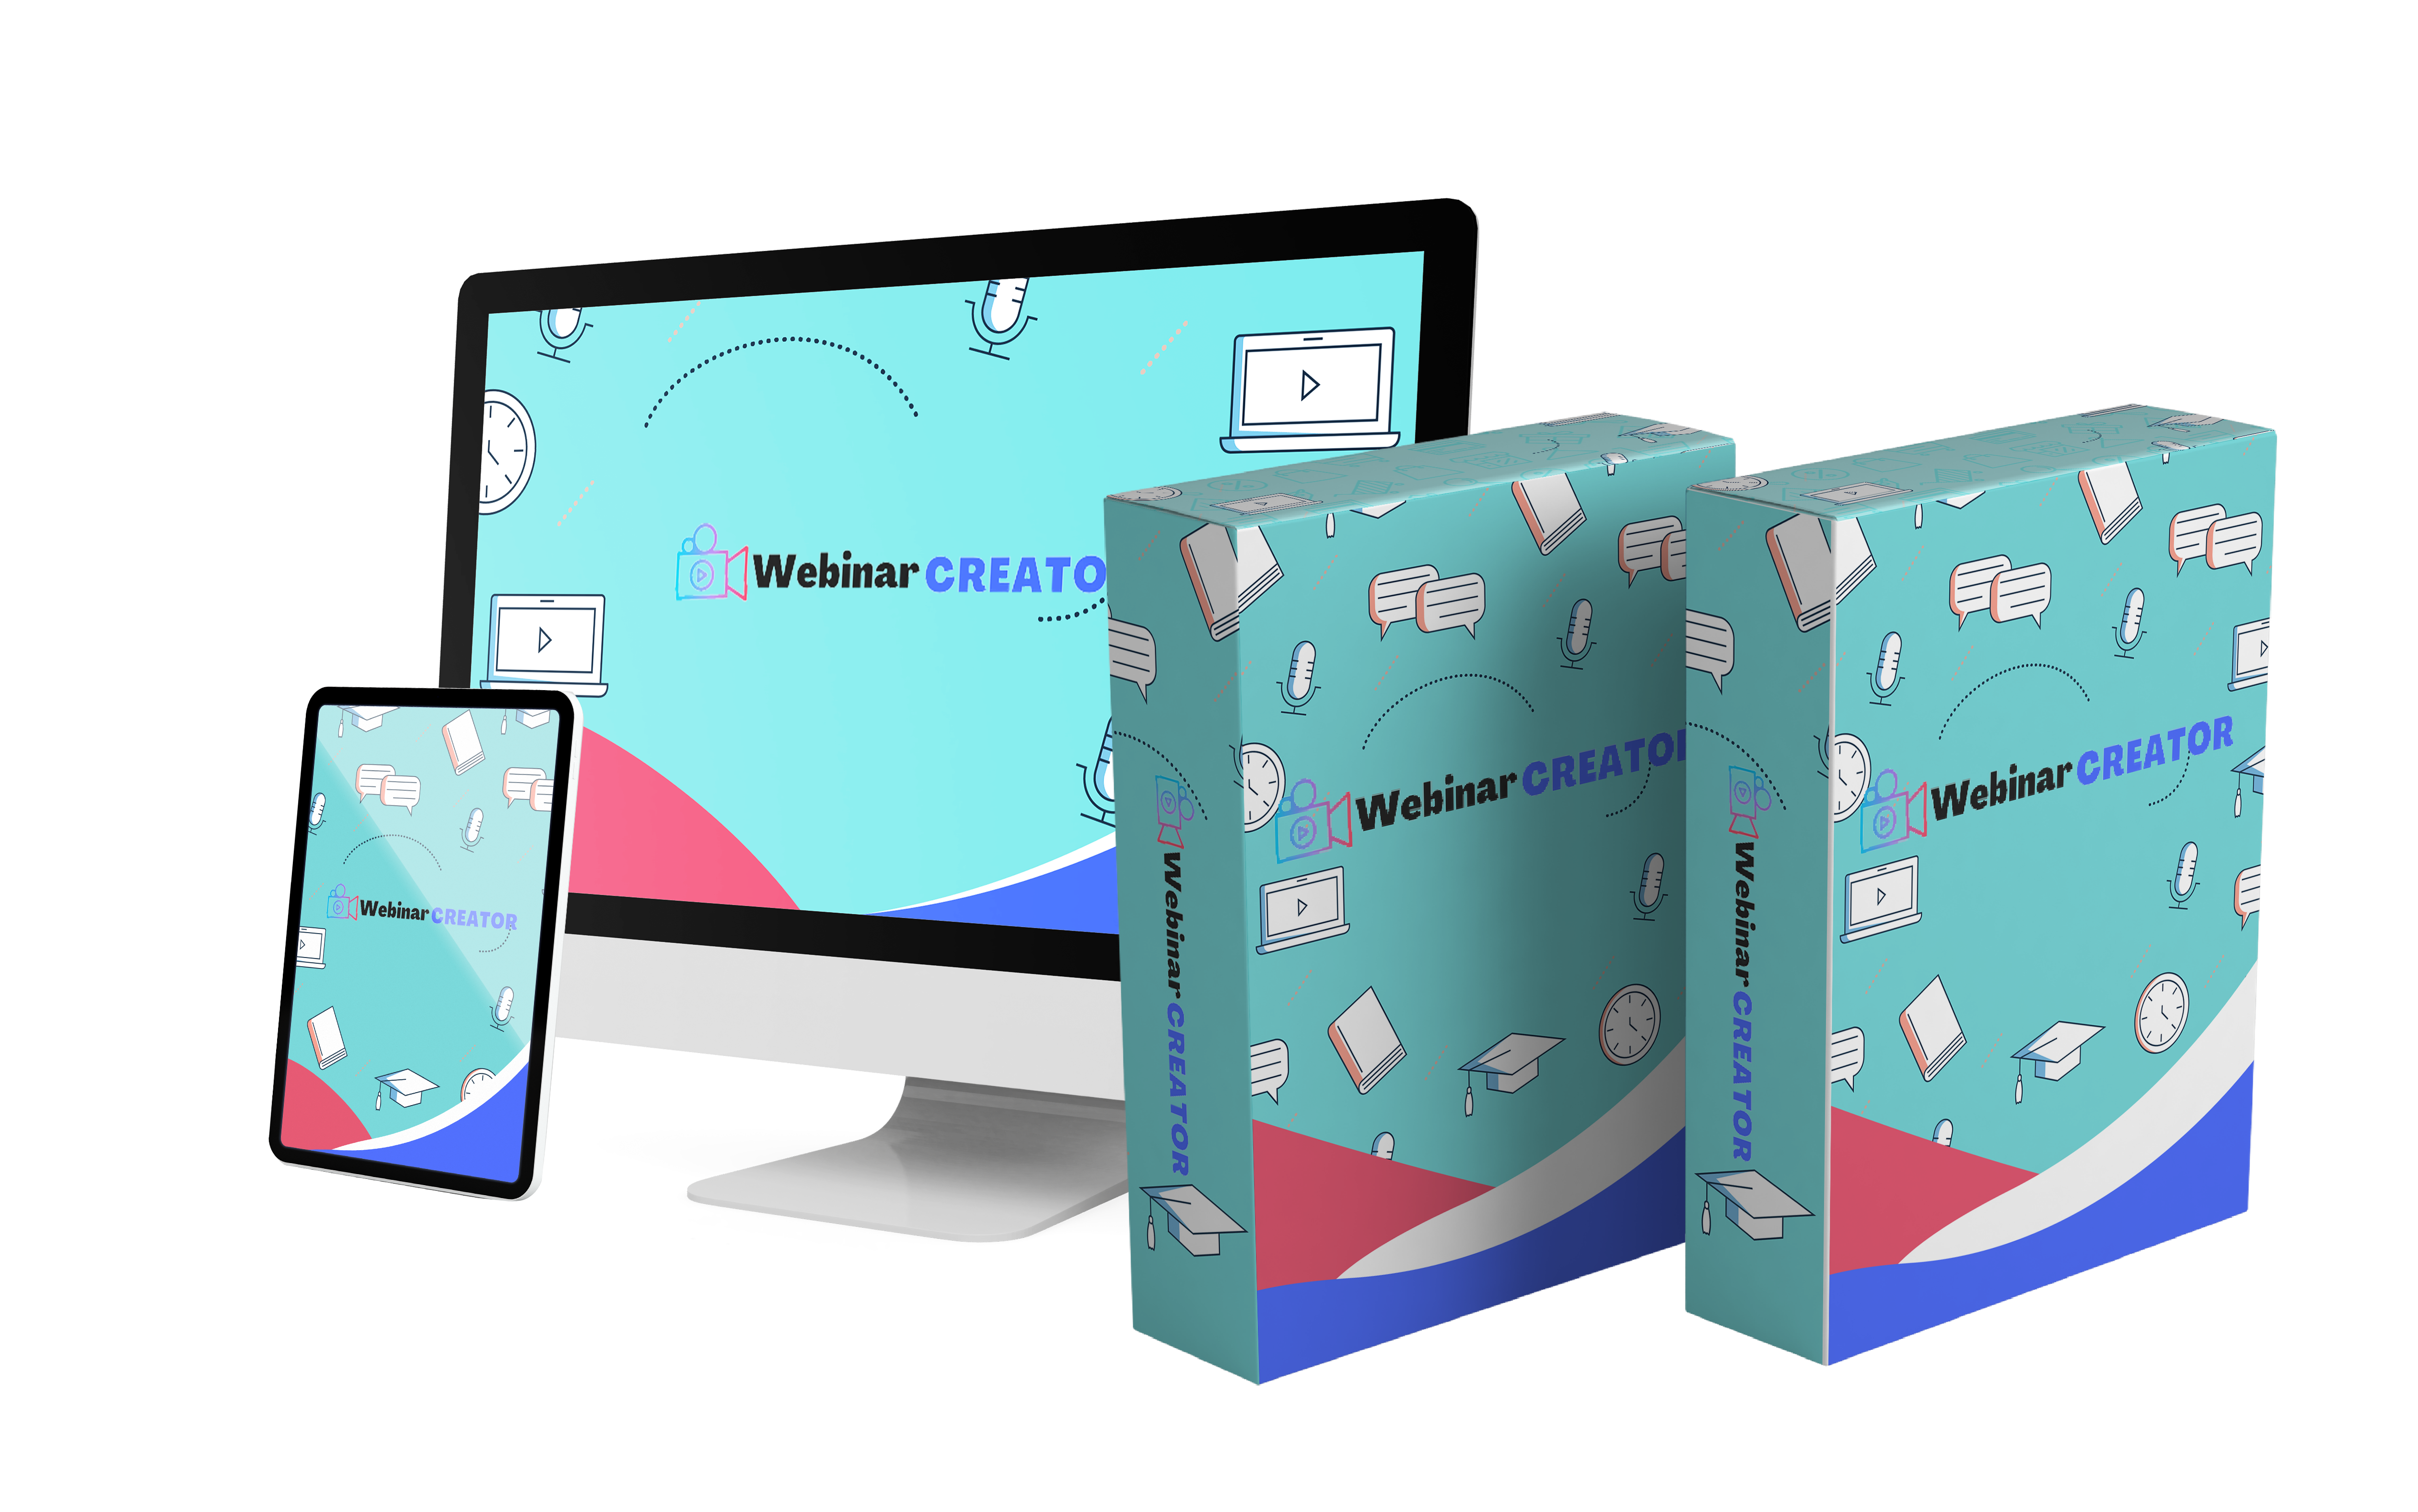 WebinarCreator